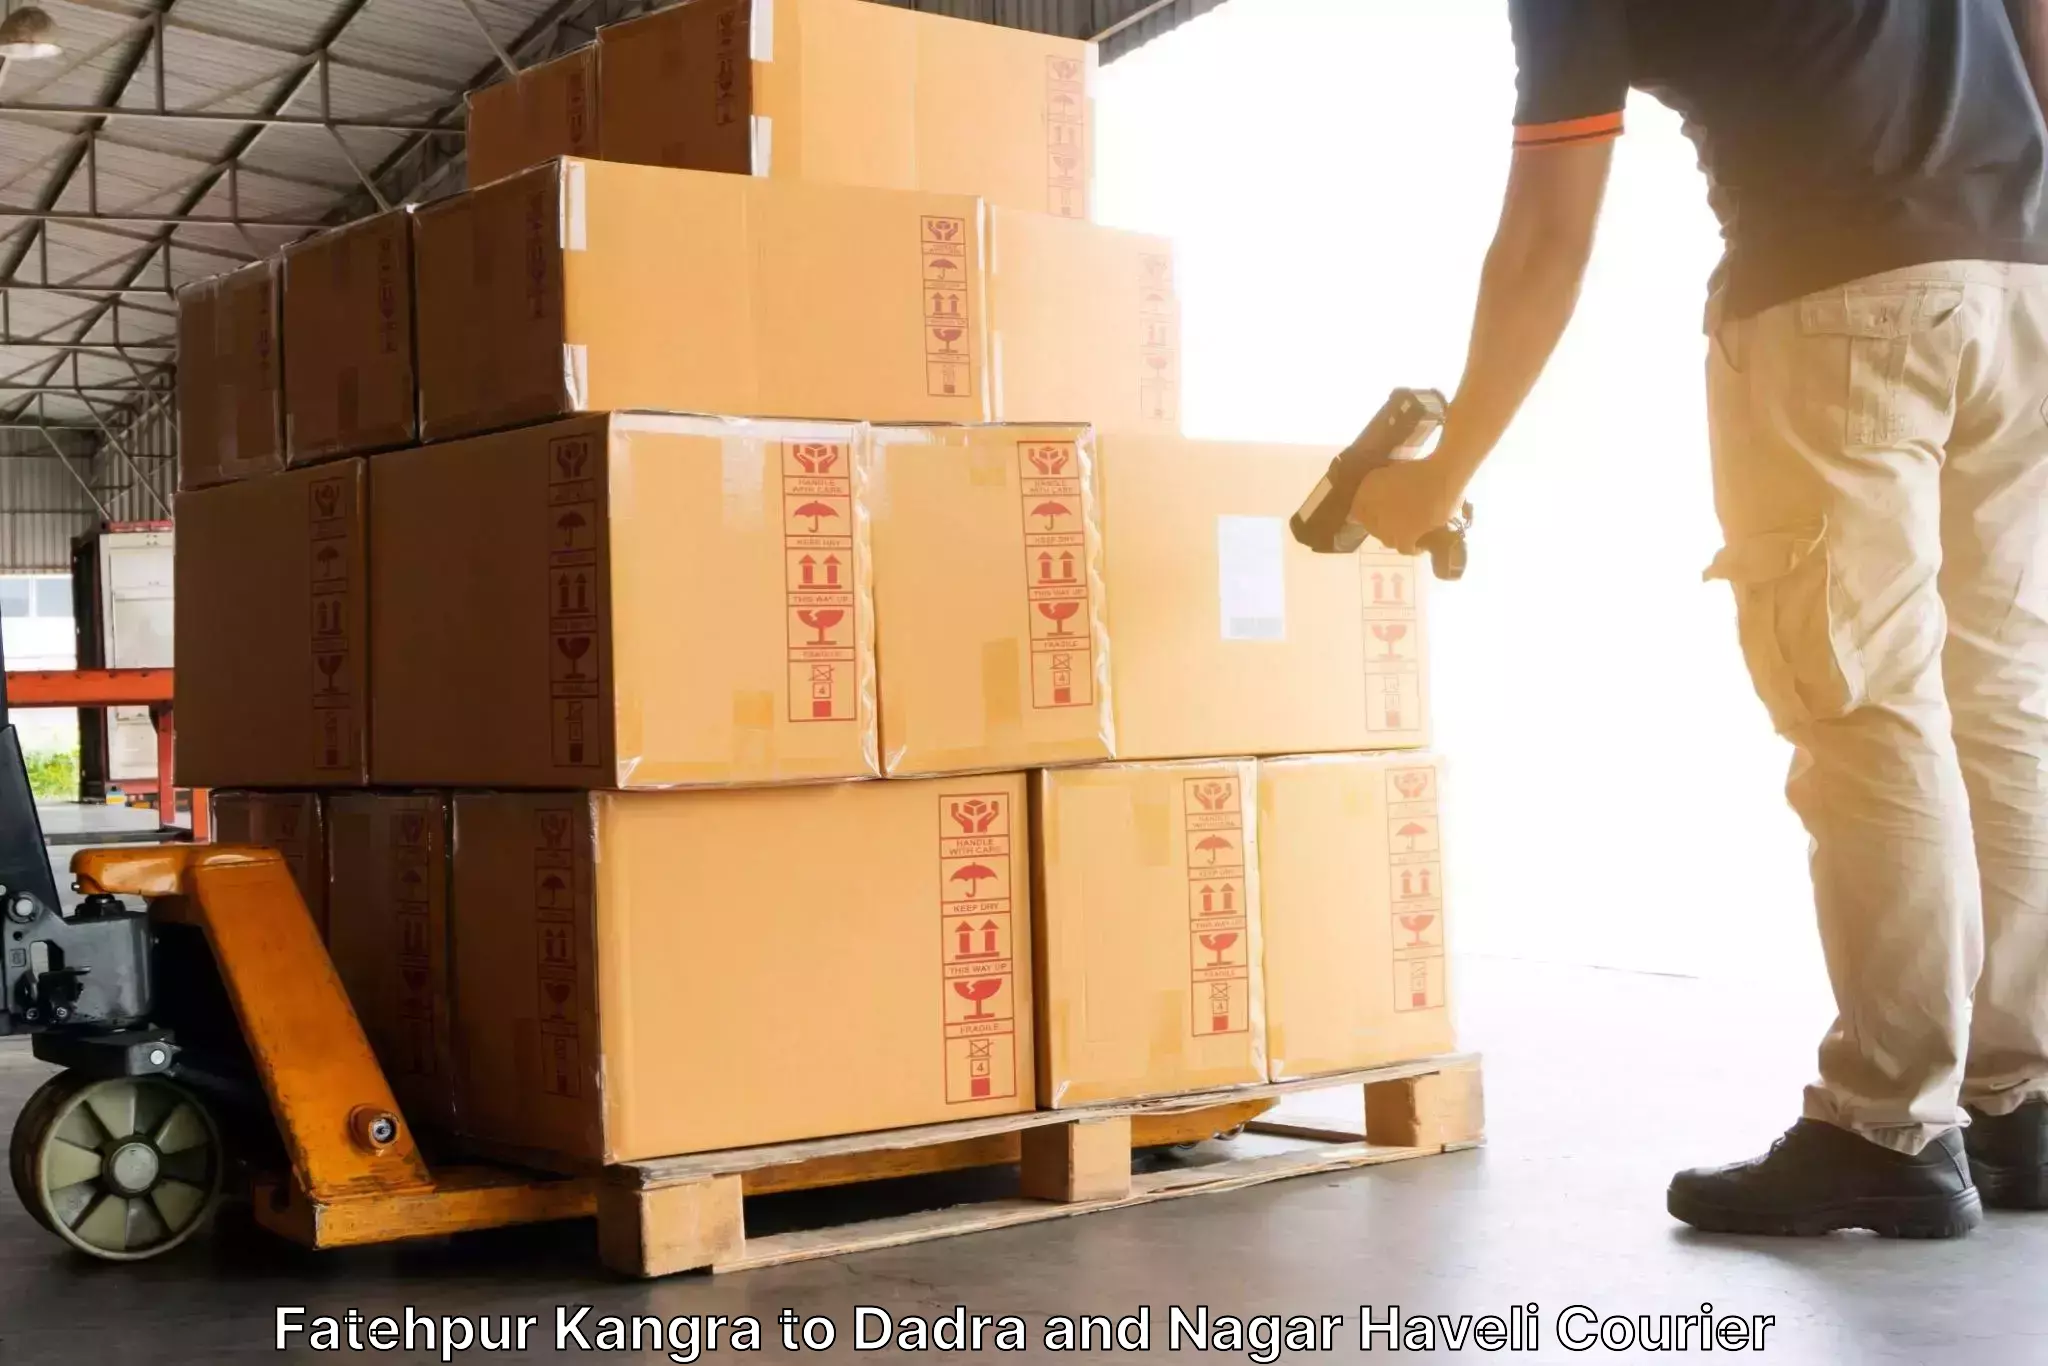 On-demand shipping options Fatehpur Kangra to Silvassa